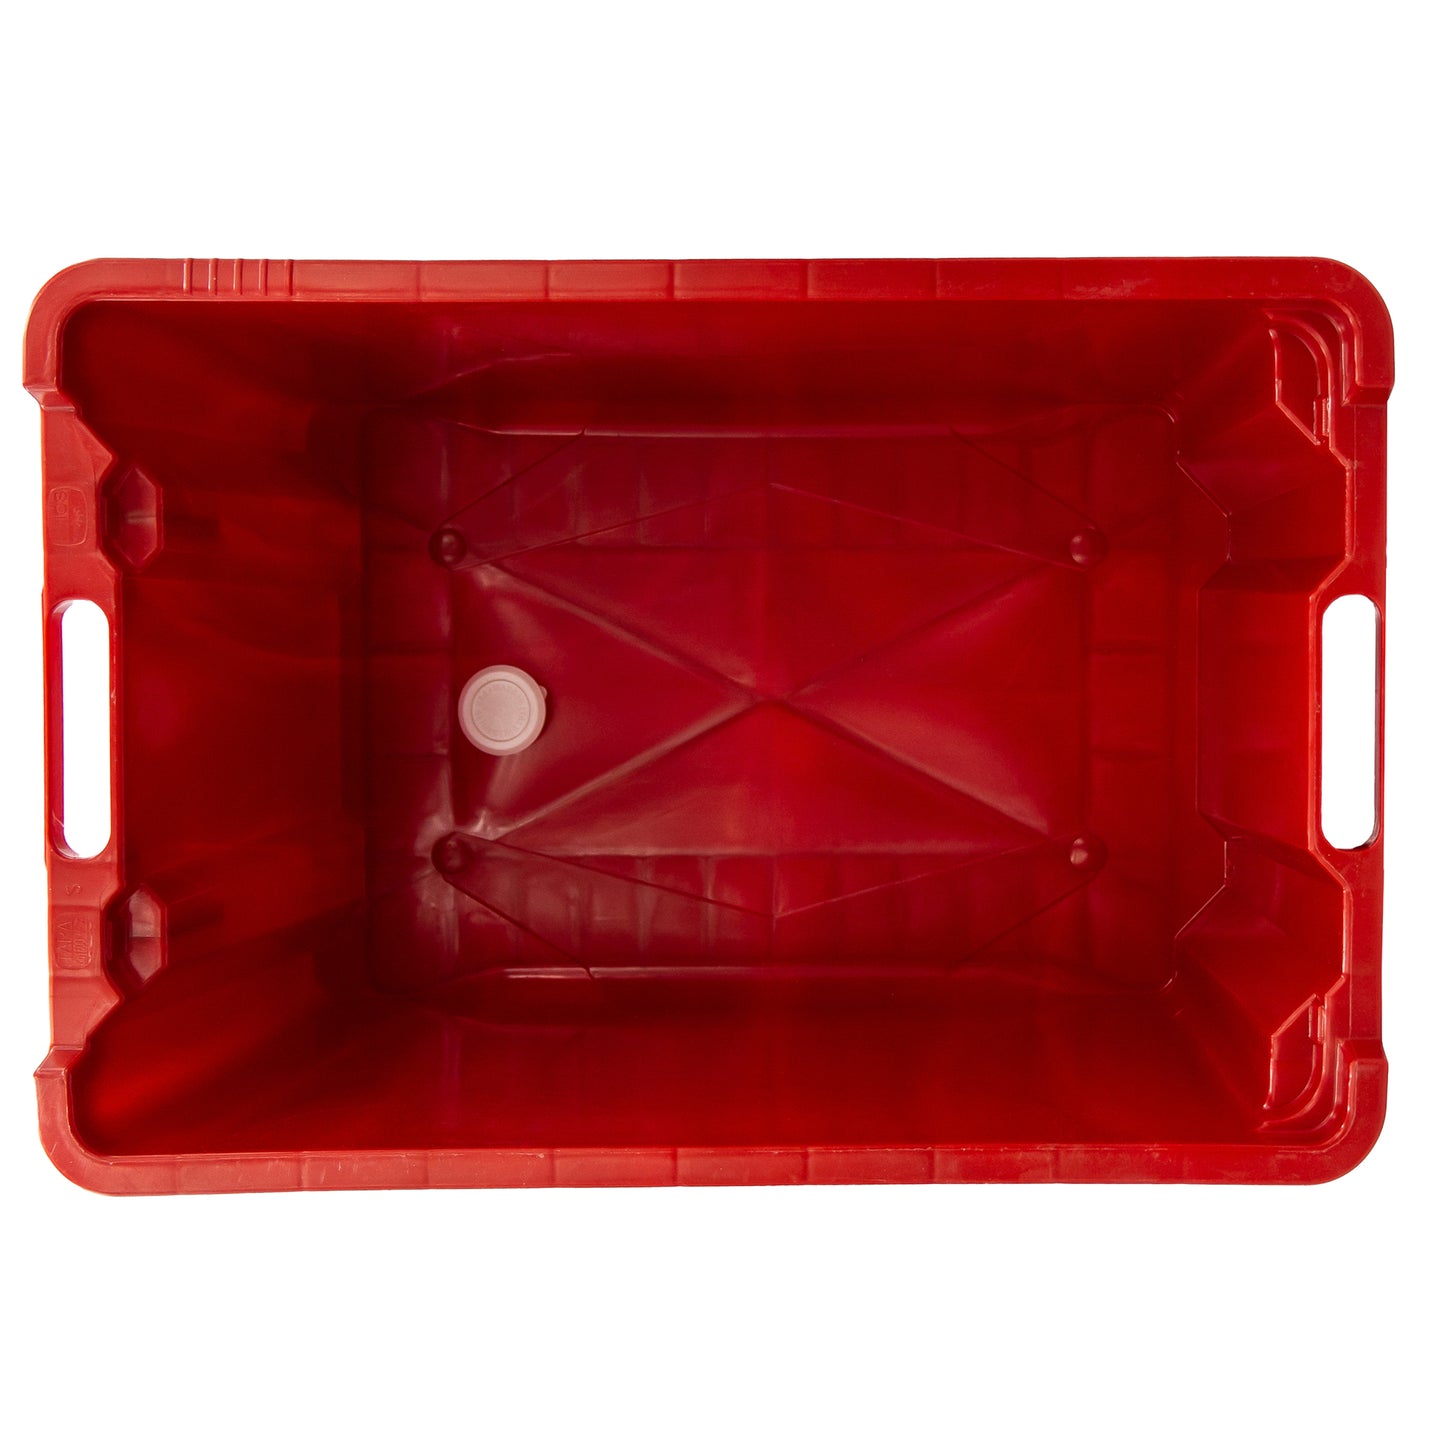 40 litre red crate food grade plastic crate with tomato sauce passata filling nozzle